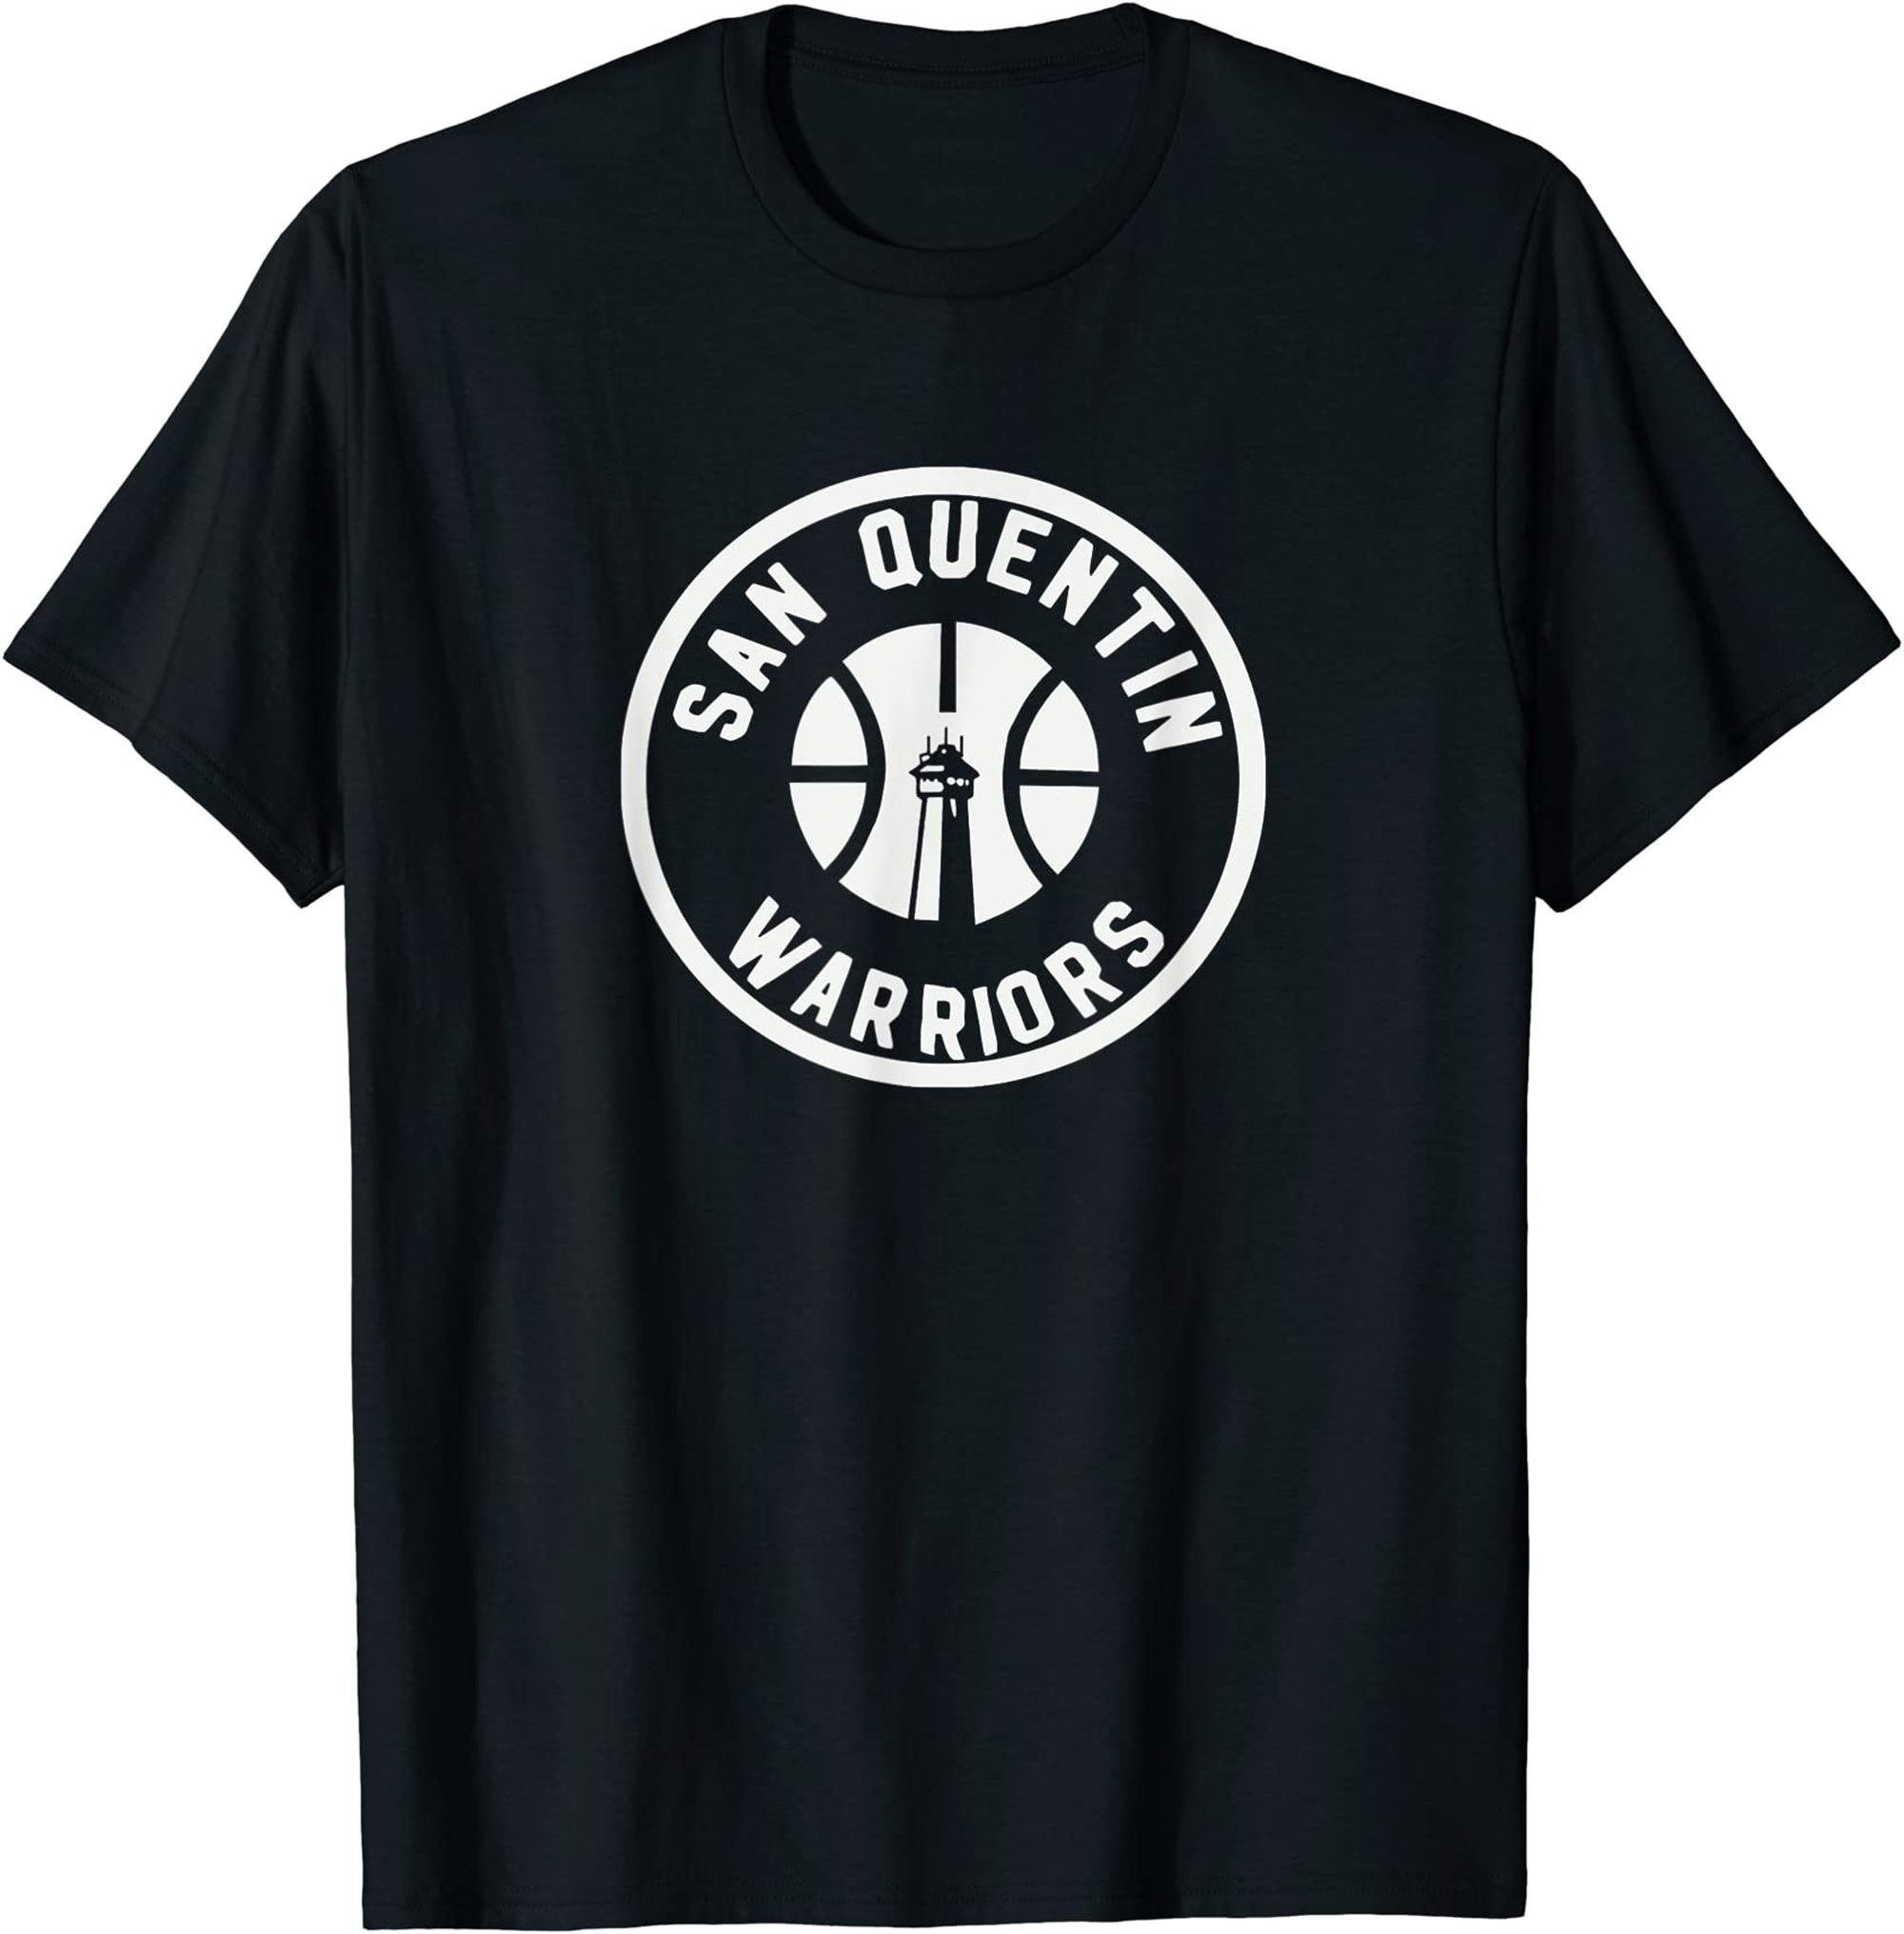 San Quentin Warriors Shirt T-shirt Plus Size Up To 5xl